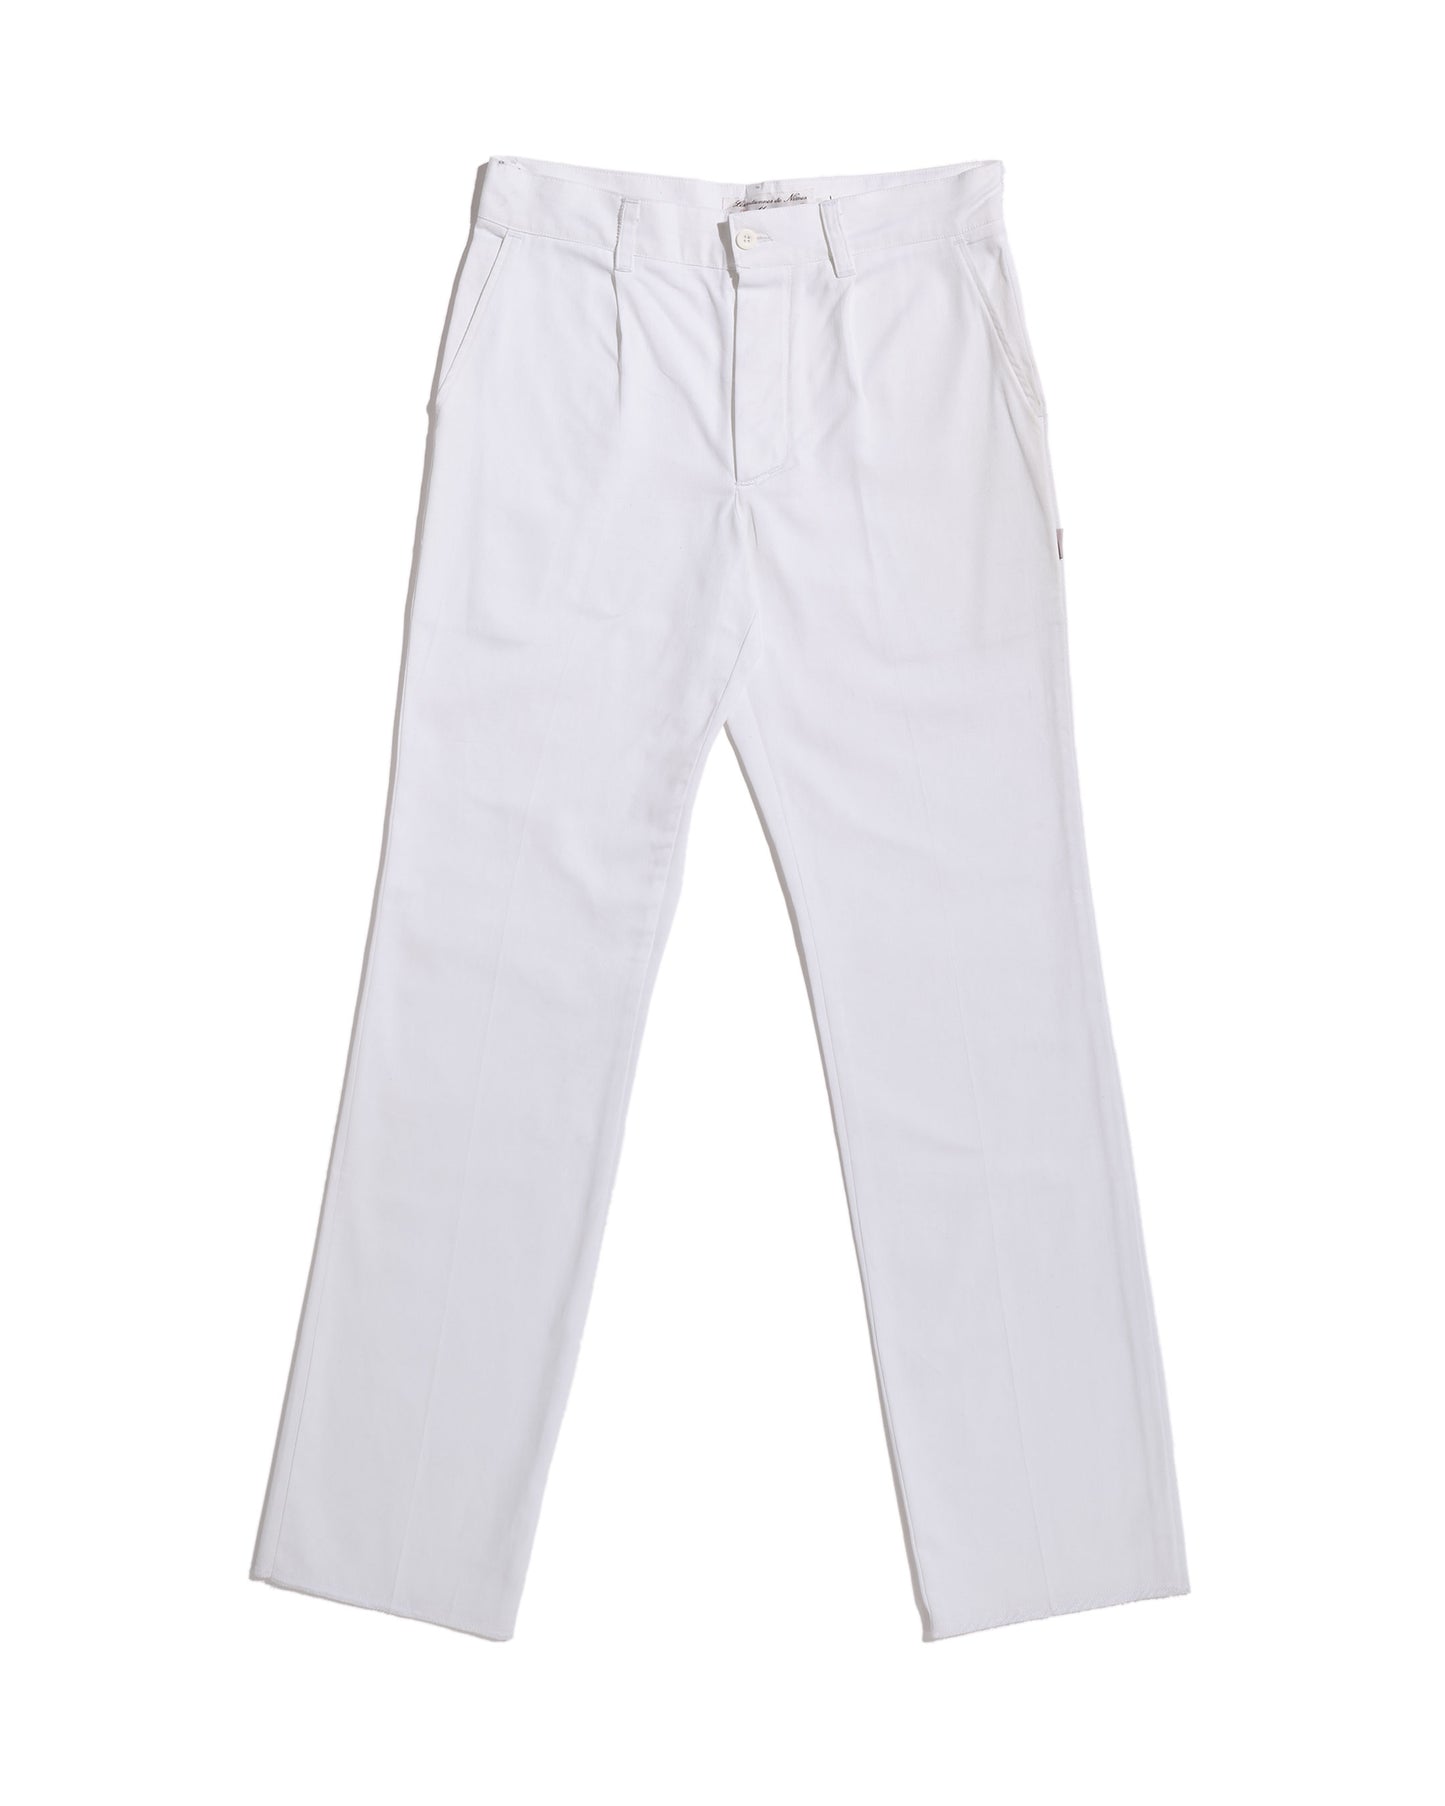 White cotton Raseteur pants